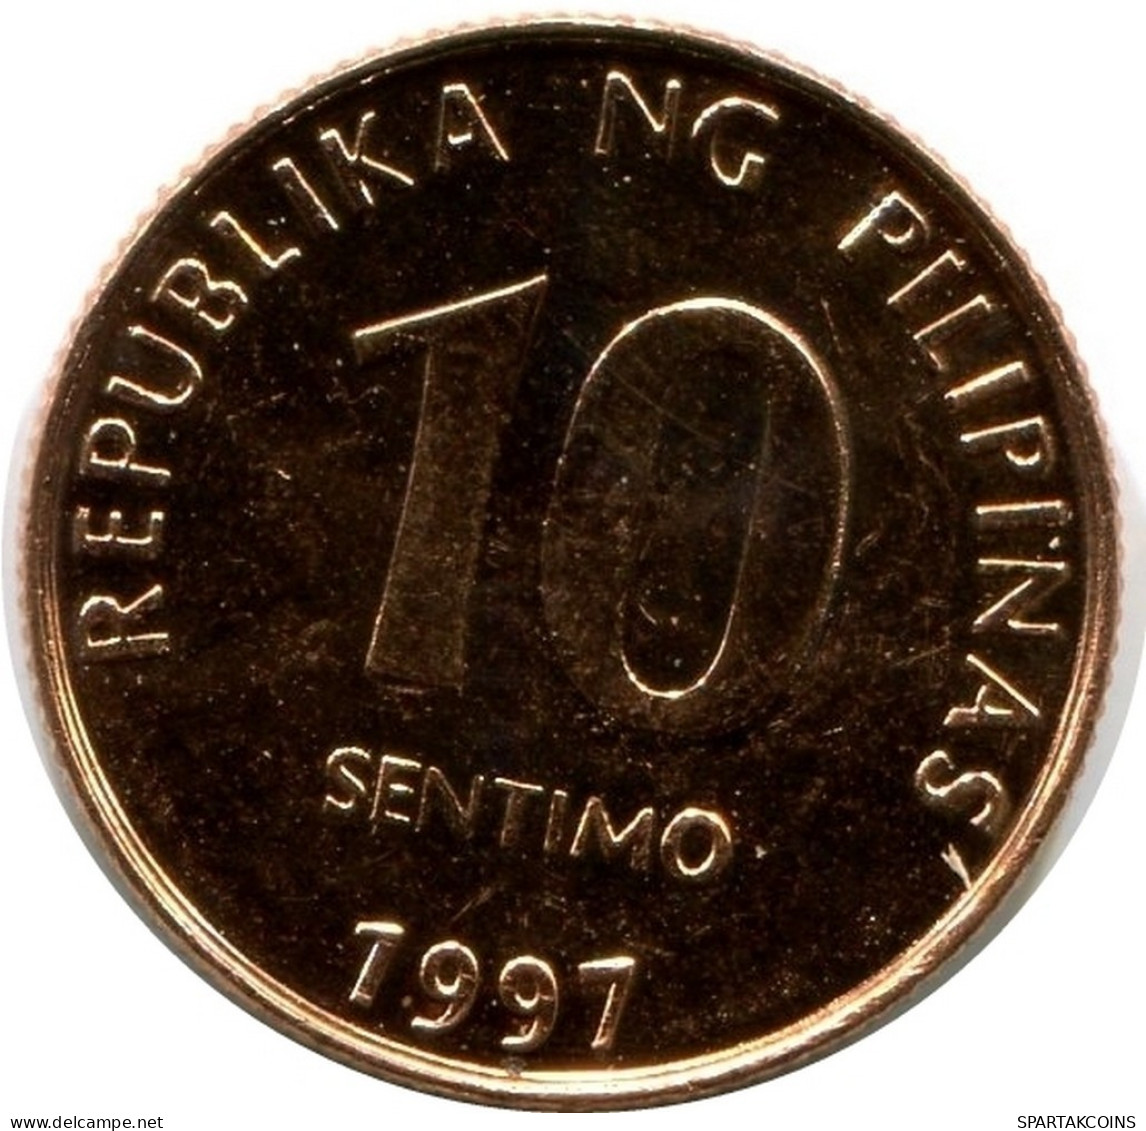 10 CENTIMO 1997 PHILIPPINES UNC Coin #M10116.U.A - Philippines